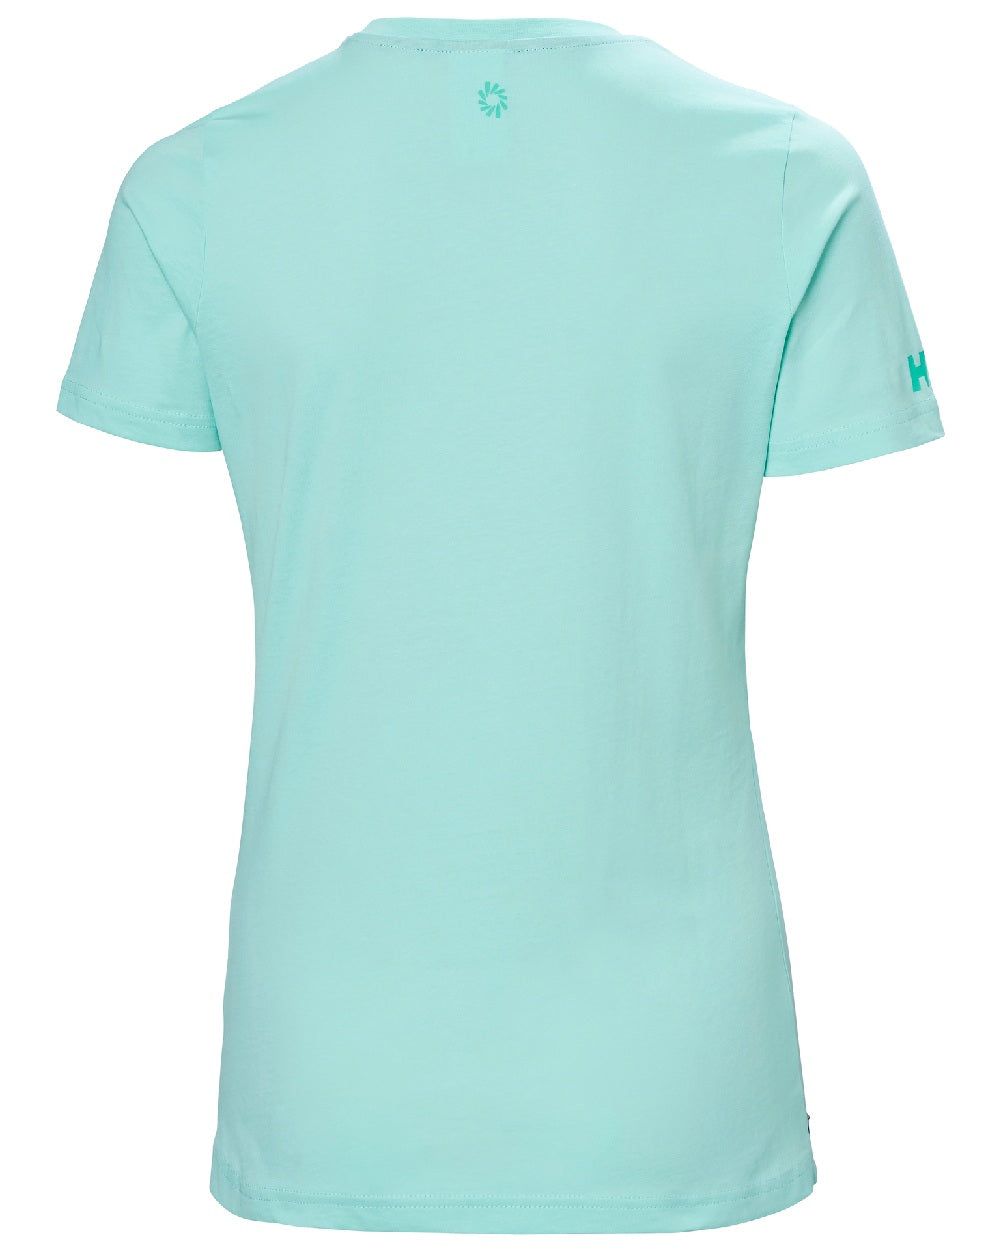 Blue tint coloured Helly Hansen Womens Ocean Race T-Shirt on white background 